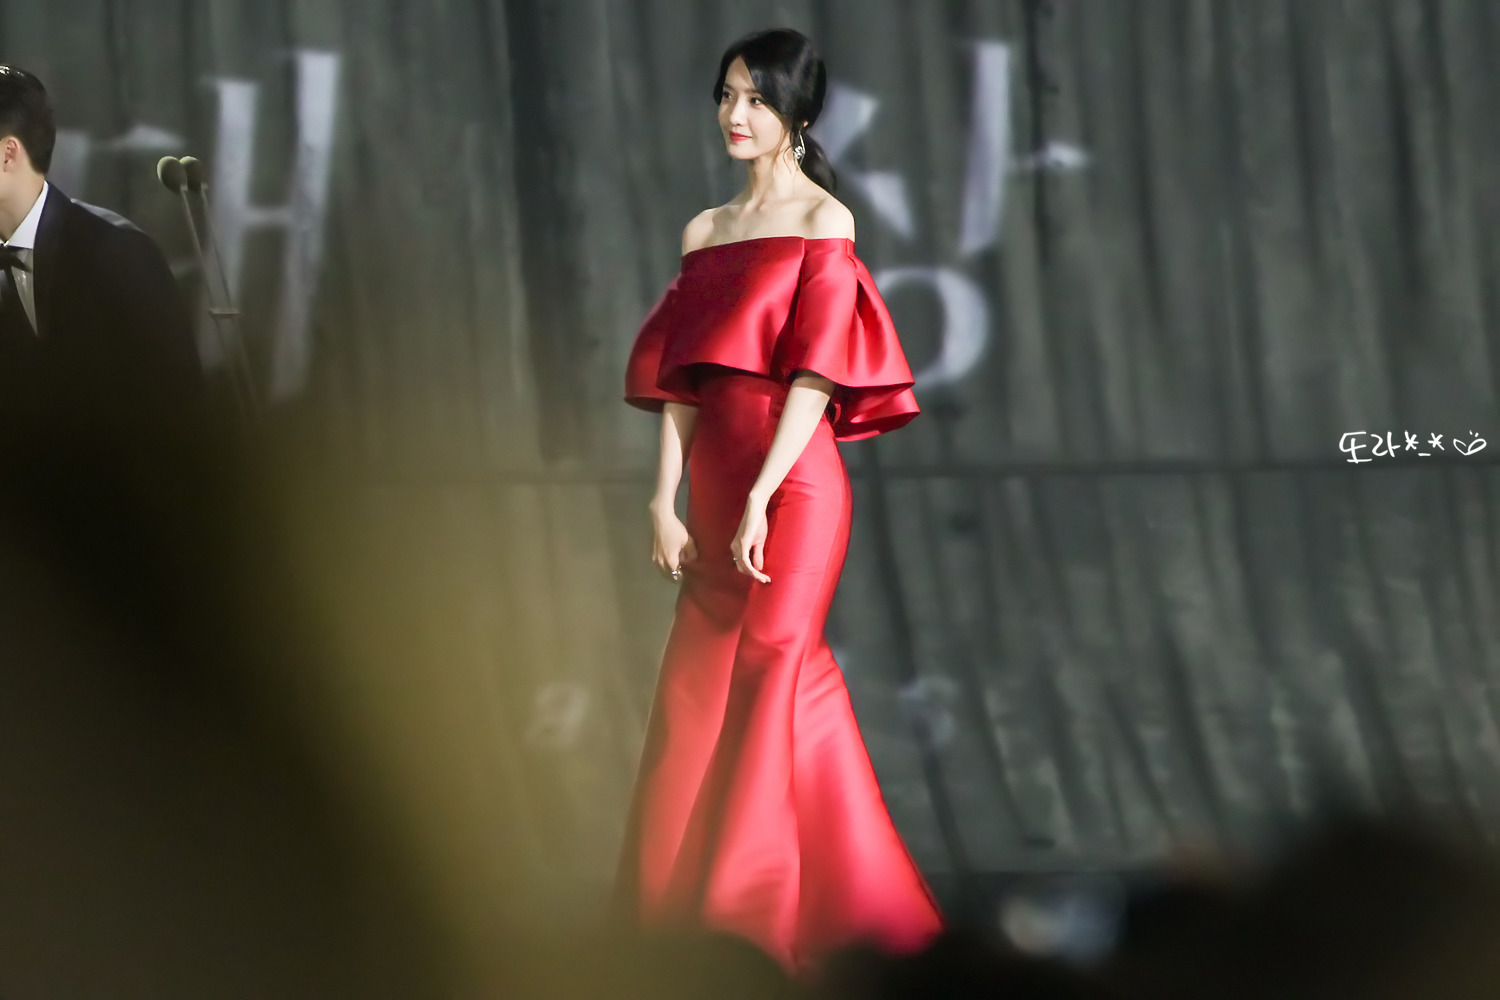 [PIC][03-05-2017]YoonA tham dự "53rd Baeksang Arts Awards" vào chiều nay + Giành "Most Popular Actress or Star Century Popularity Award (in Film)" - Page 2 25287739590C664813D8D5